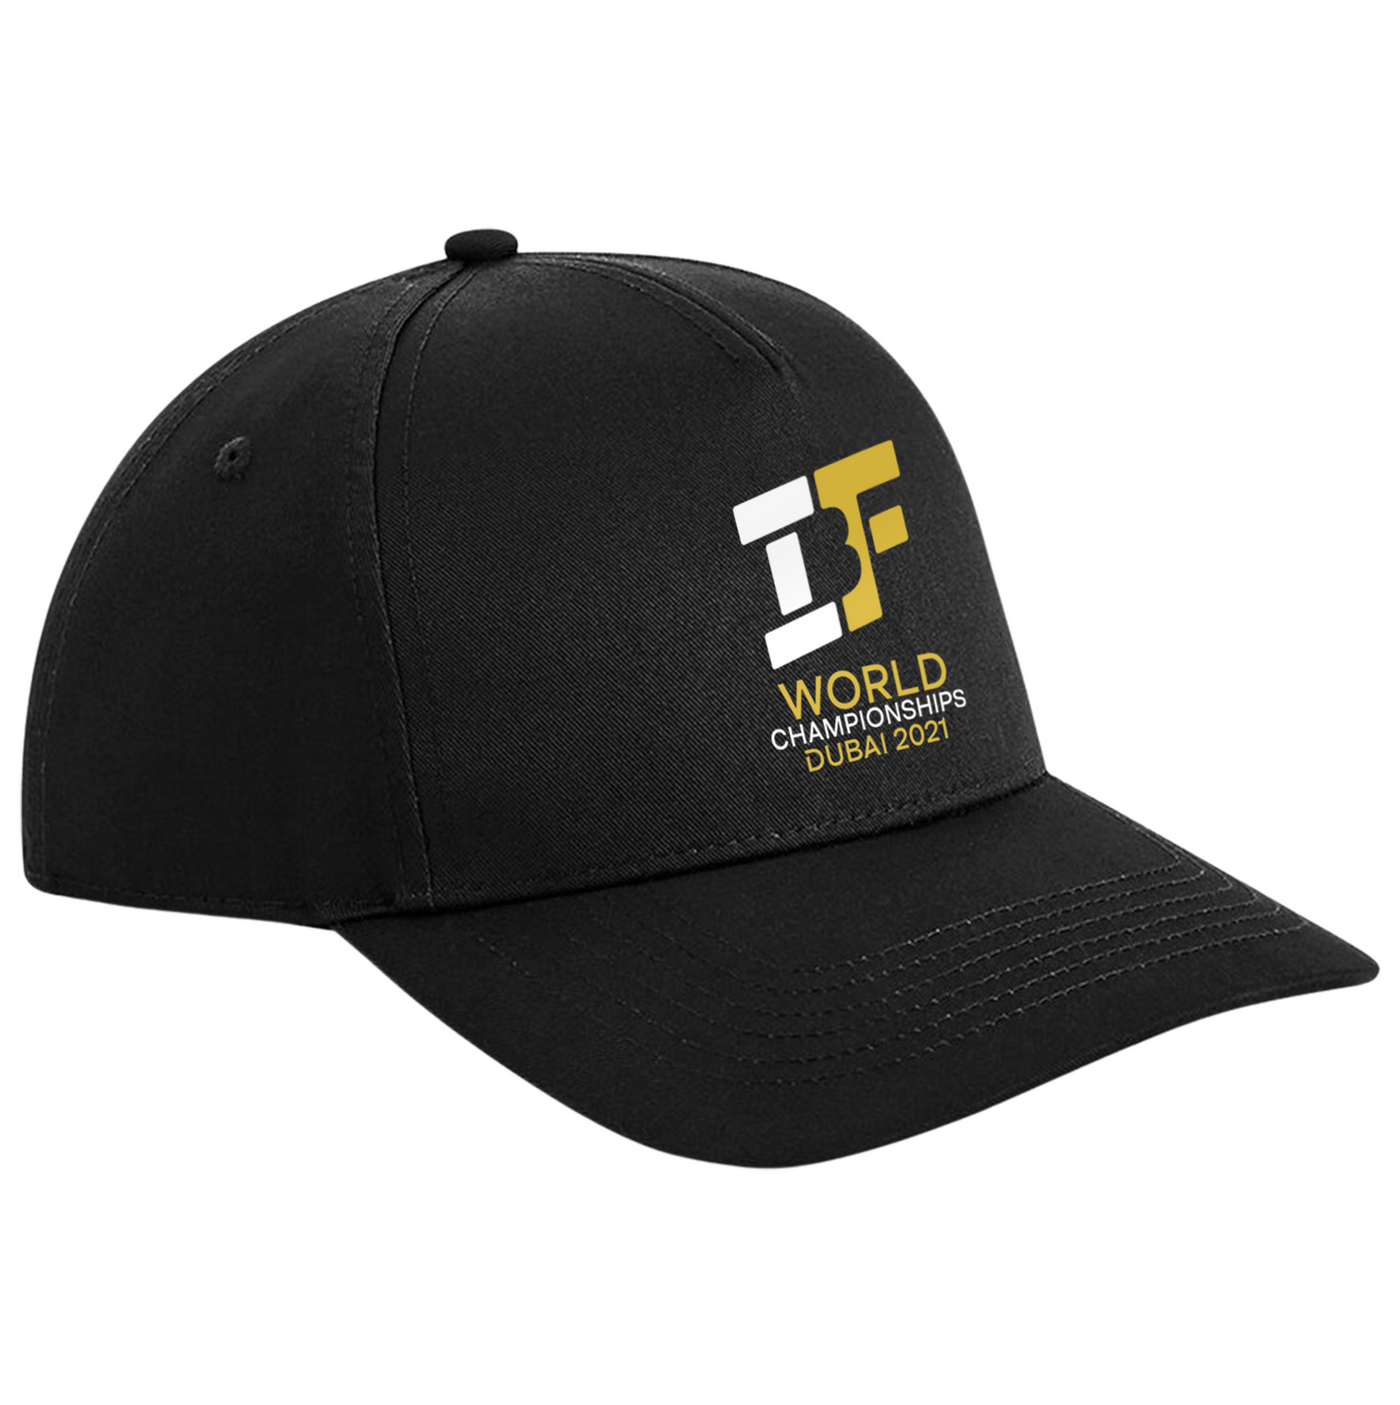 IBF World Championships Snapback Cap